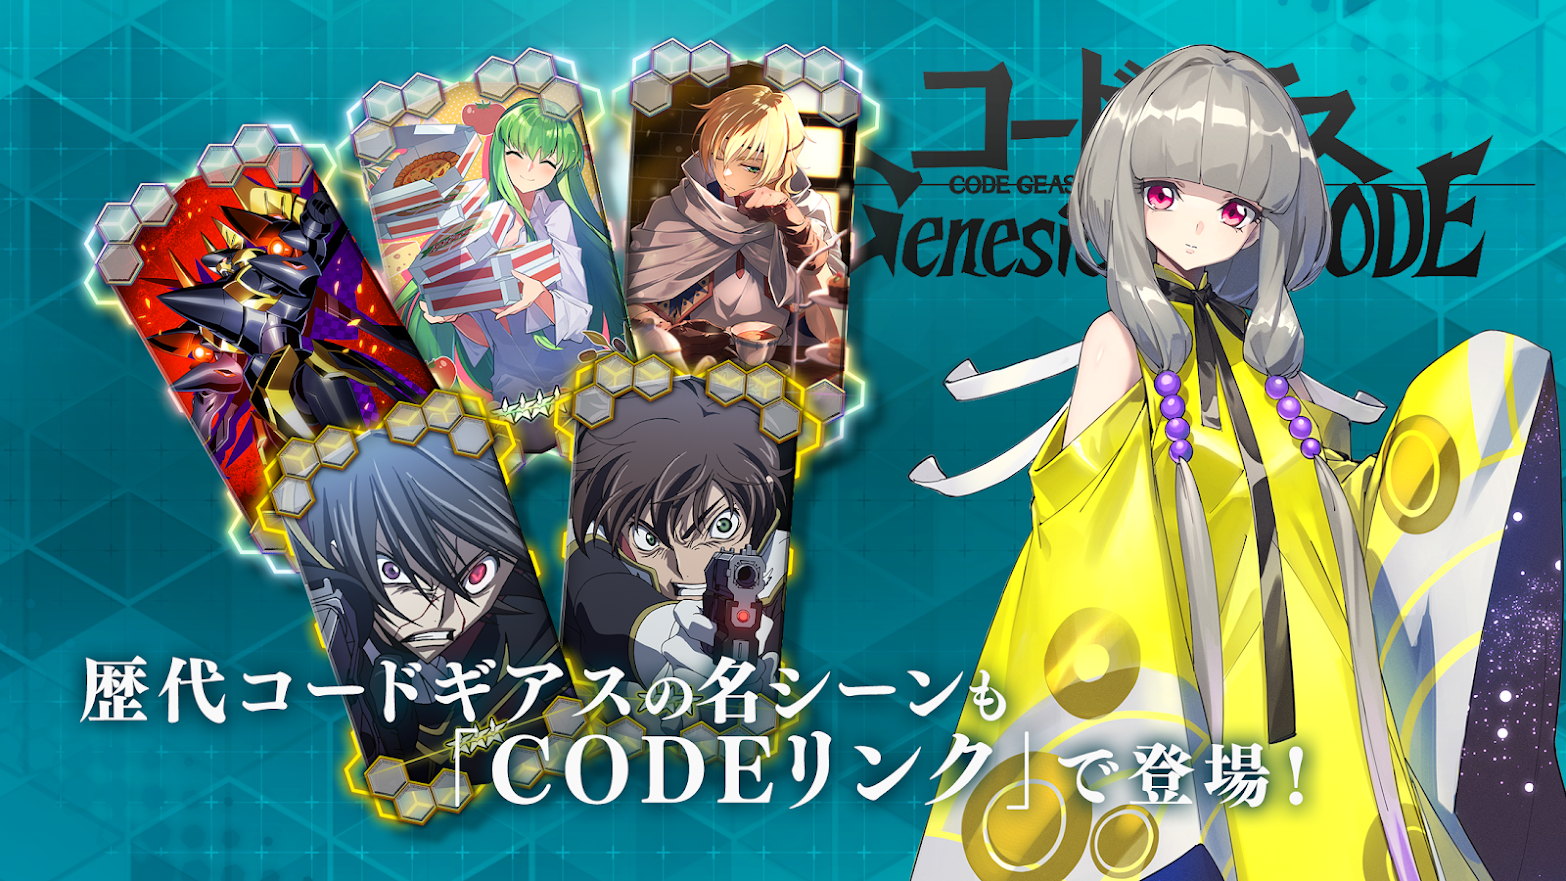 《Code Geass Genesic Re;CODE》宣布将于 4/27 结束营运 预告陆续开放剧情最终章插图6